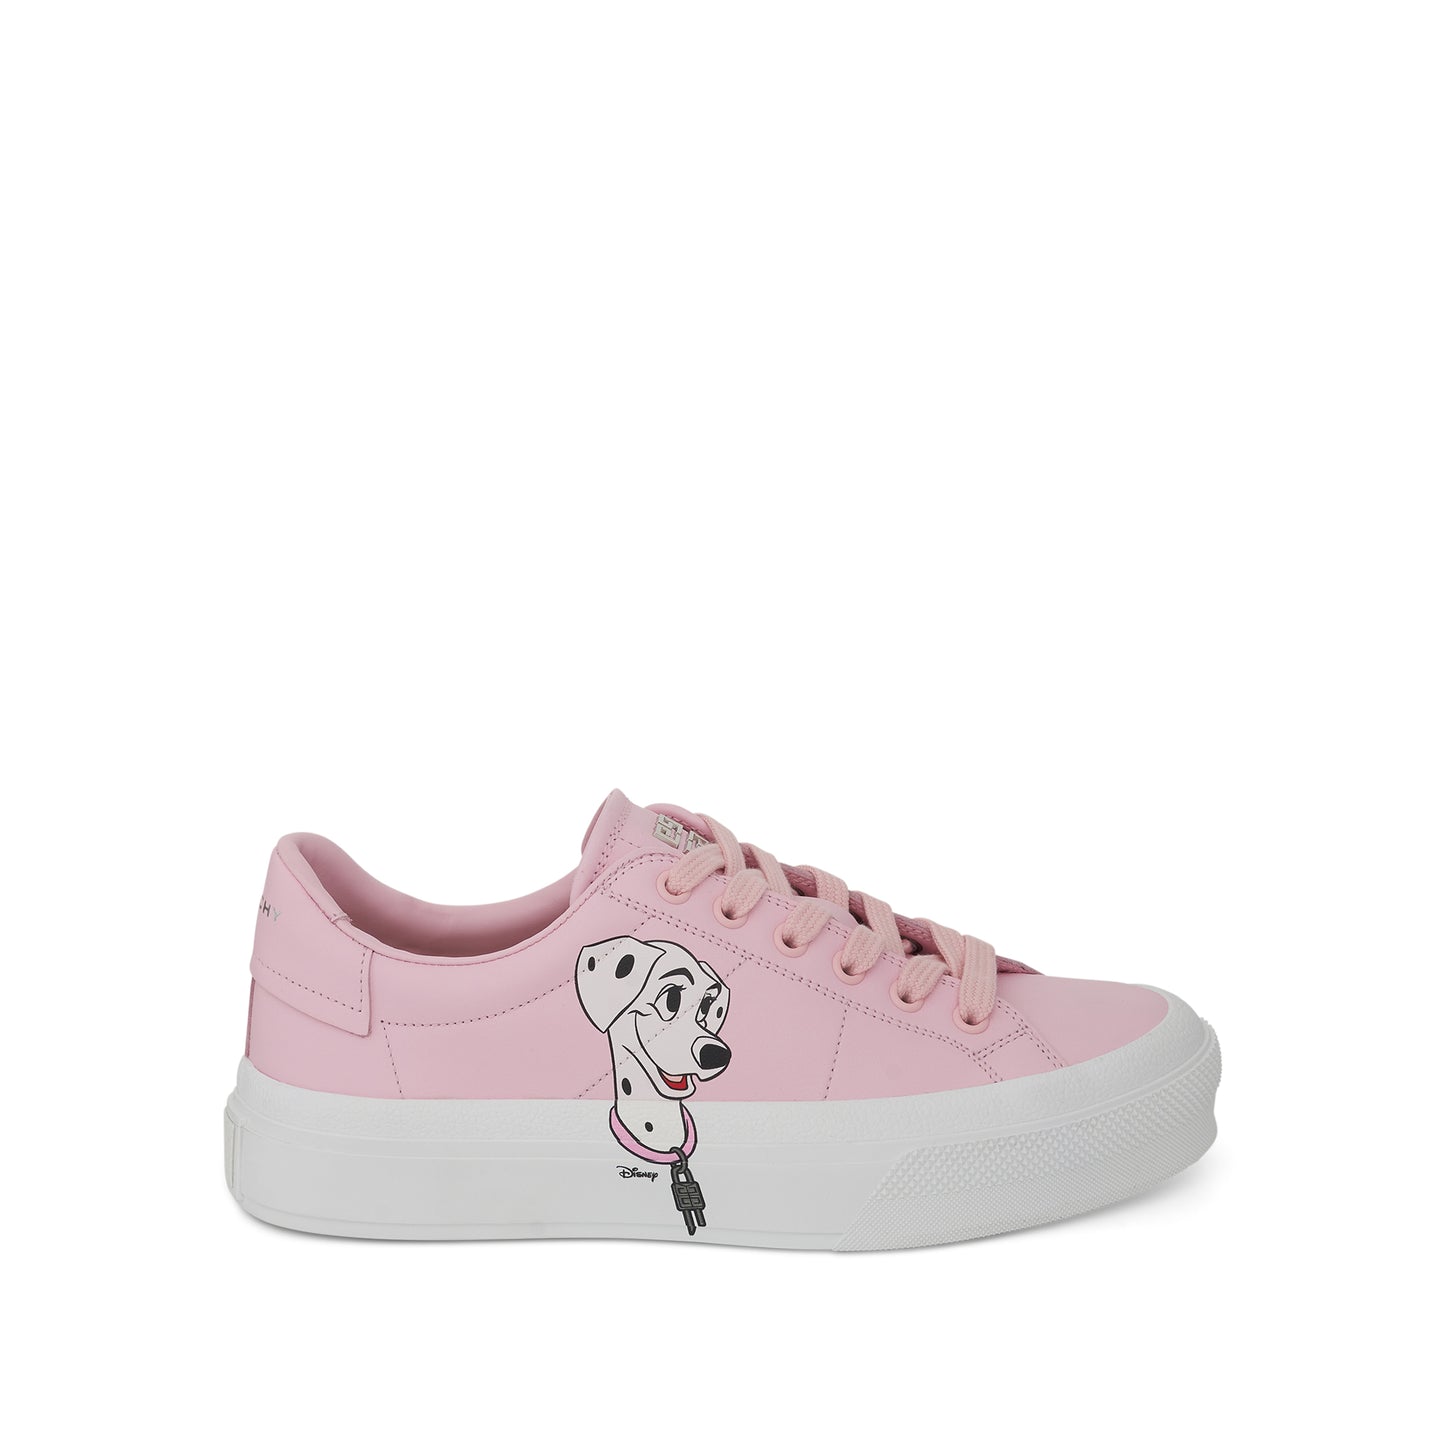 Disney 101 Dalmatians City Sport Sneaker in Blossom Pink